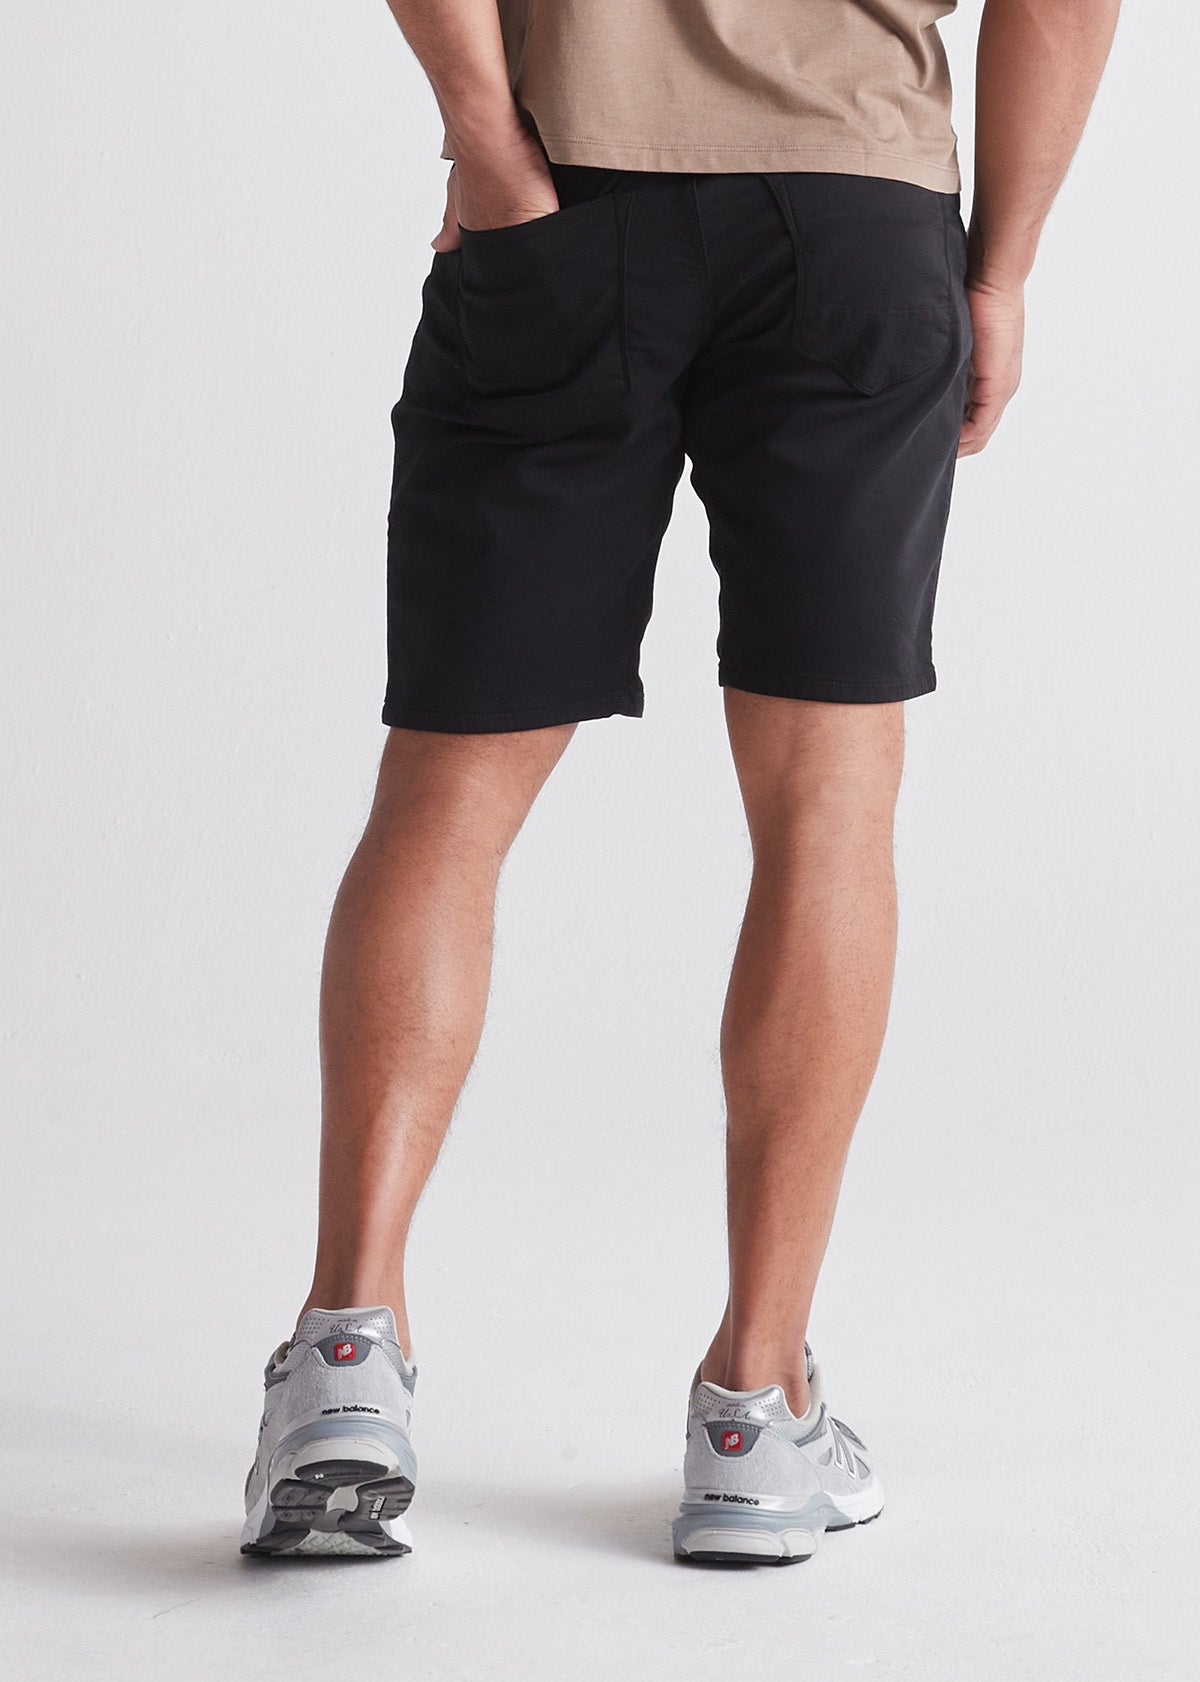 G Gradual Men's Running Shorts with Zipper Pockets Quick Dry Gym Athletic  Workout 5 Shorts for Men Black Medium